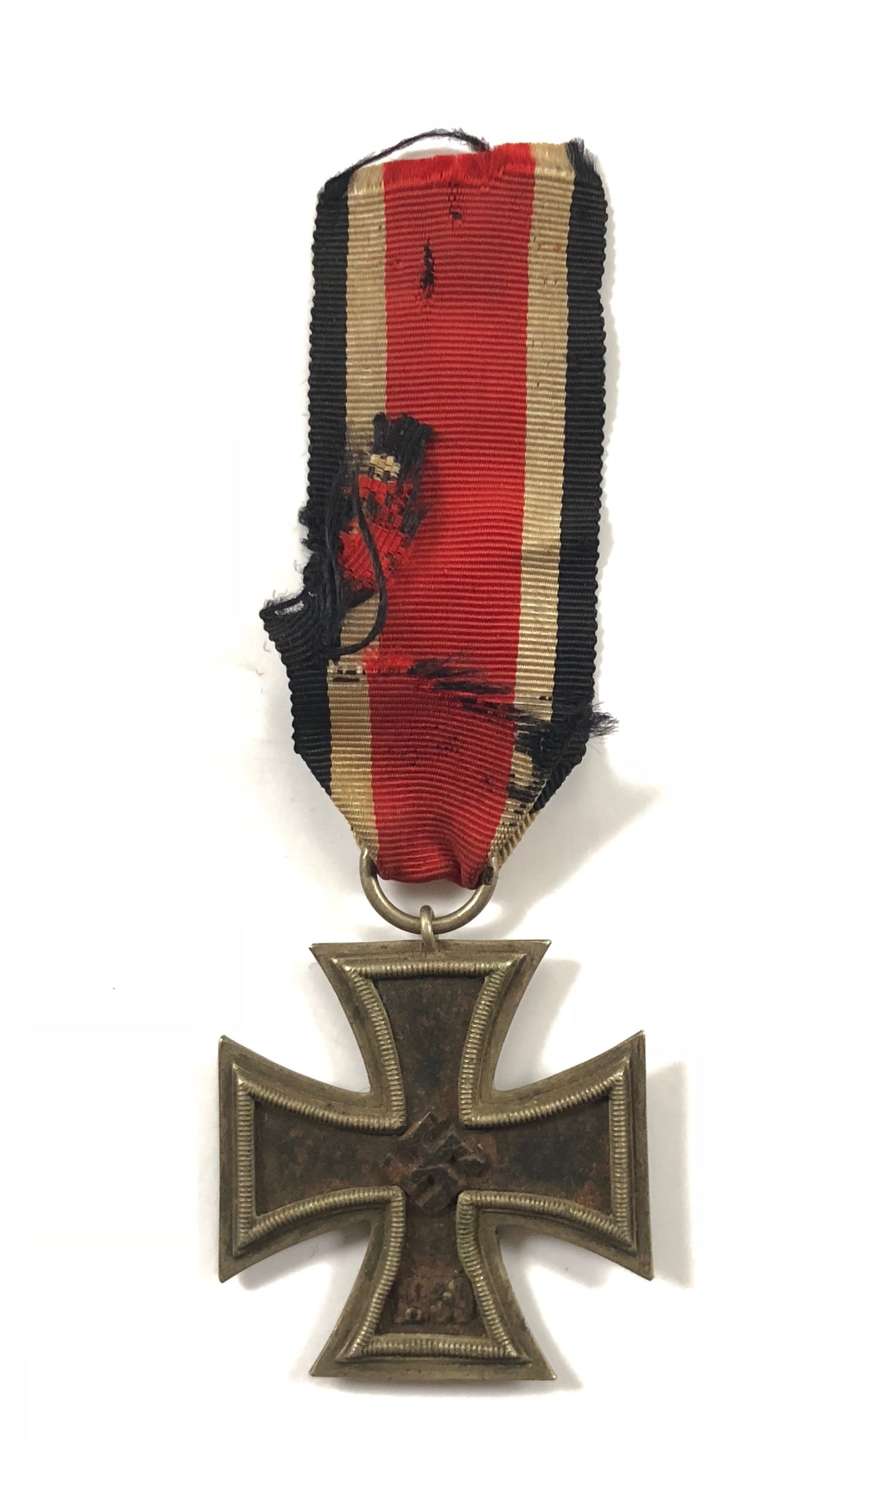 WW2 Iron Cross 2nd Class by J.E. Hammer & Sohne.